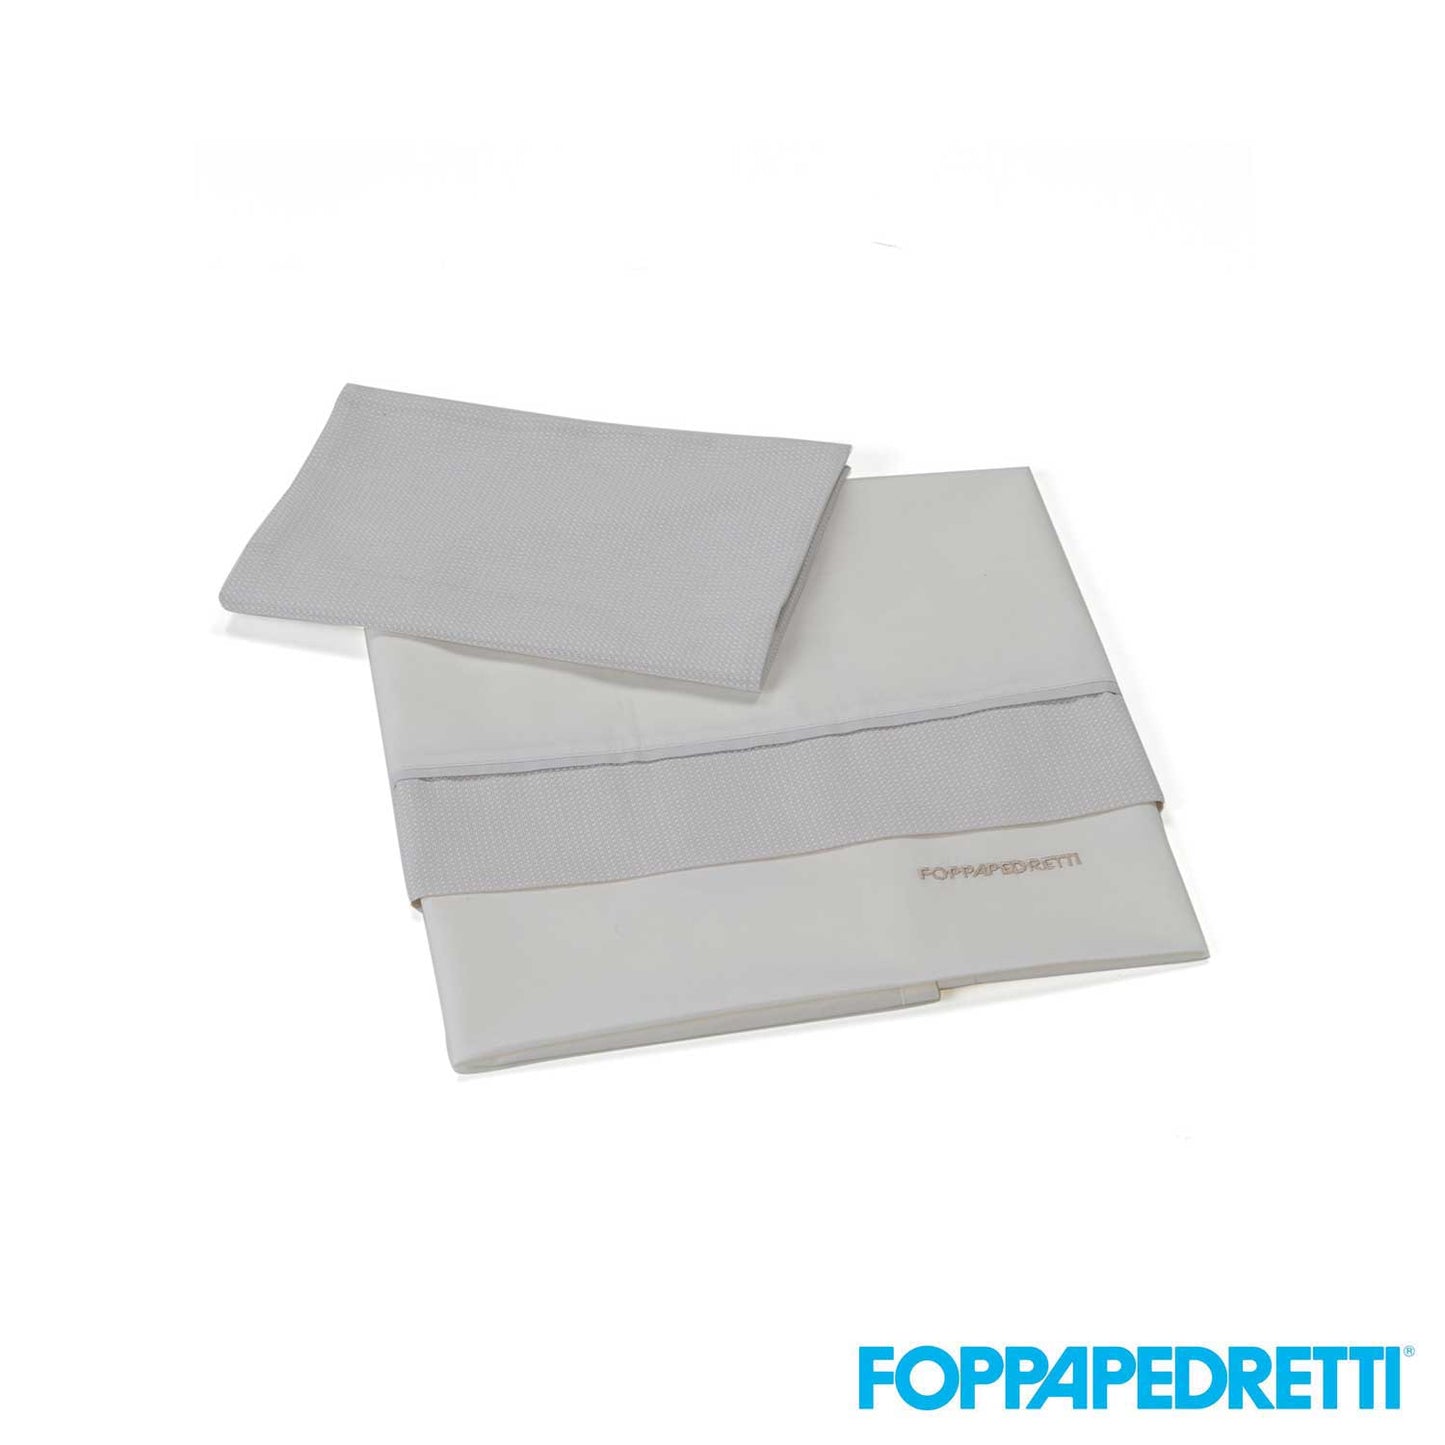 Foppapedretti - Sheet set for mybebè and inanna cradle